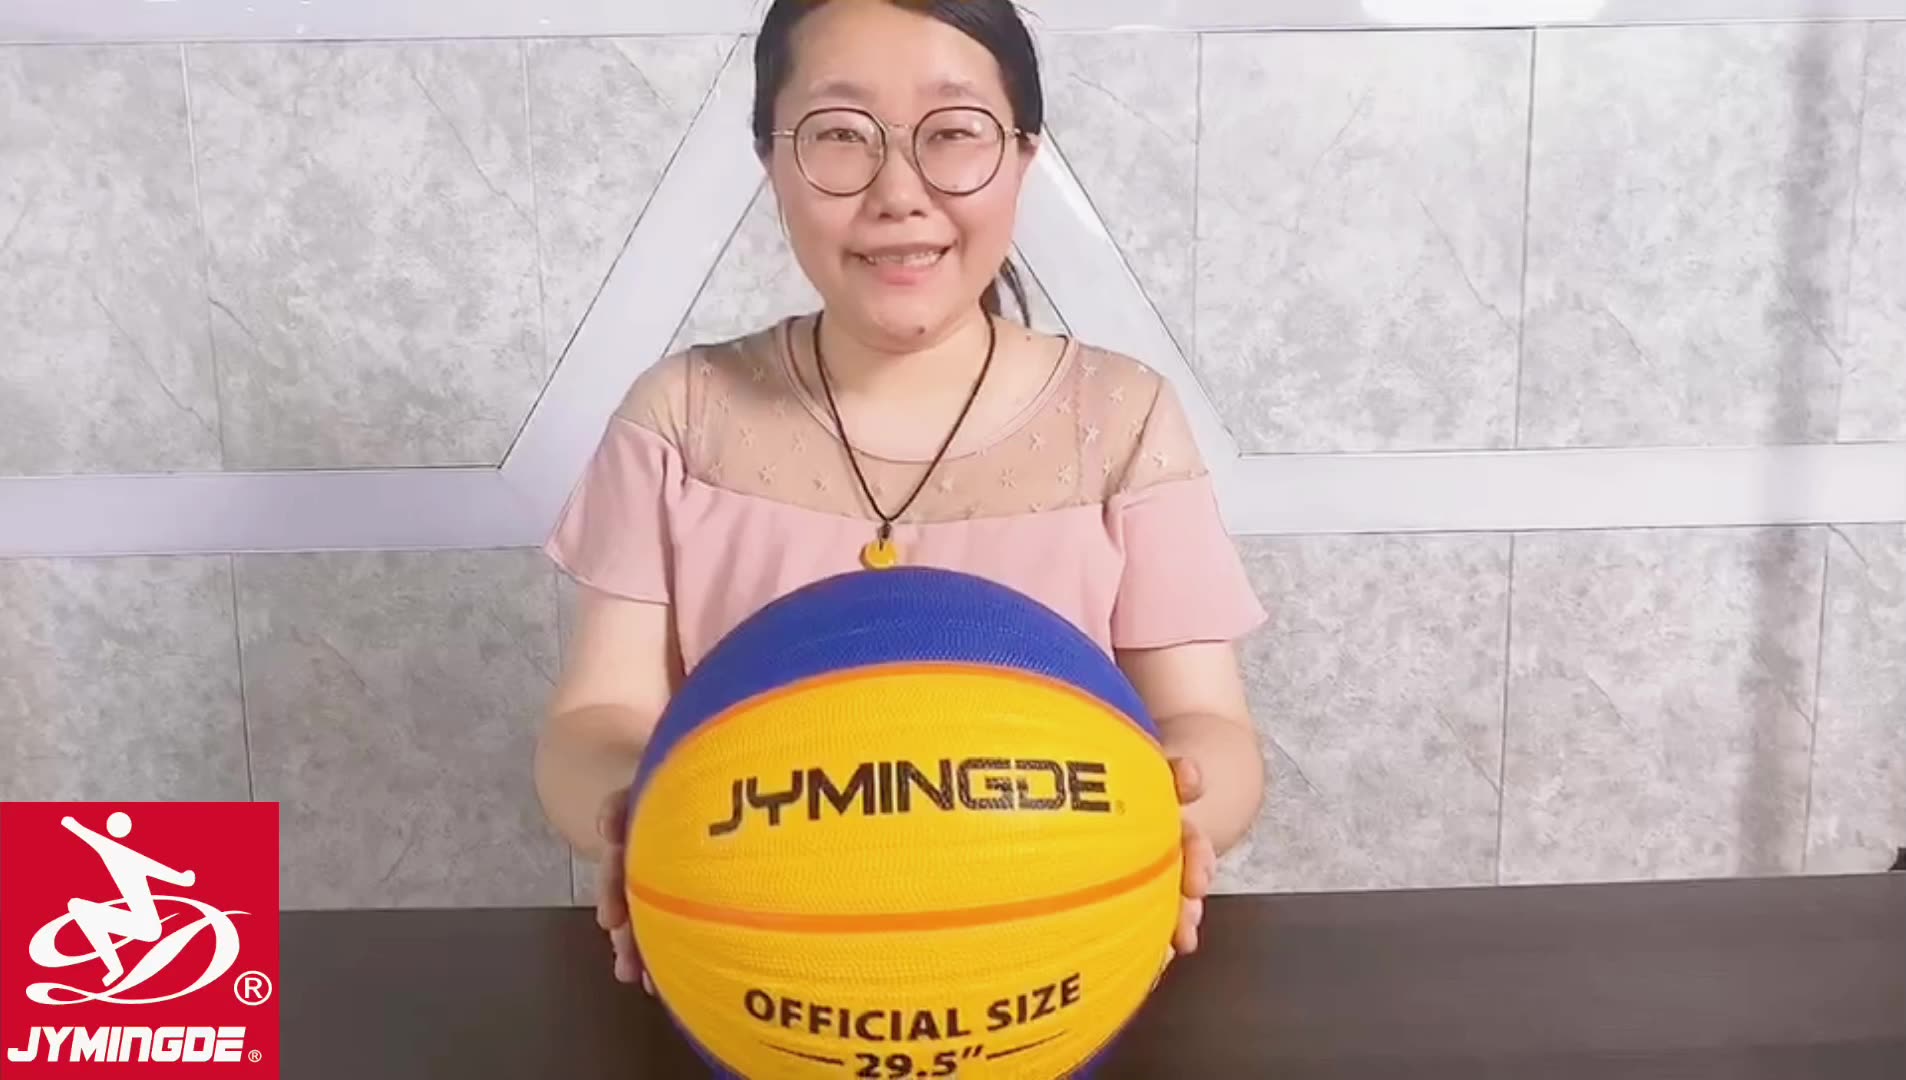 Jymingde Outdoor High Grip Balones de Basketball Products1